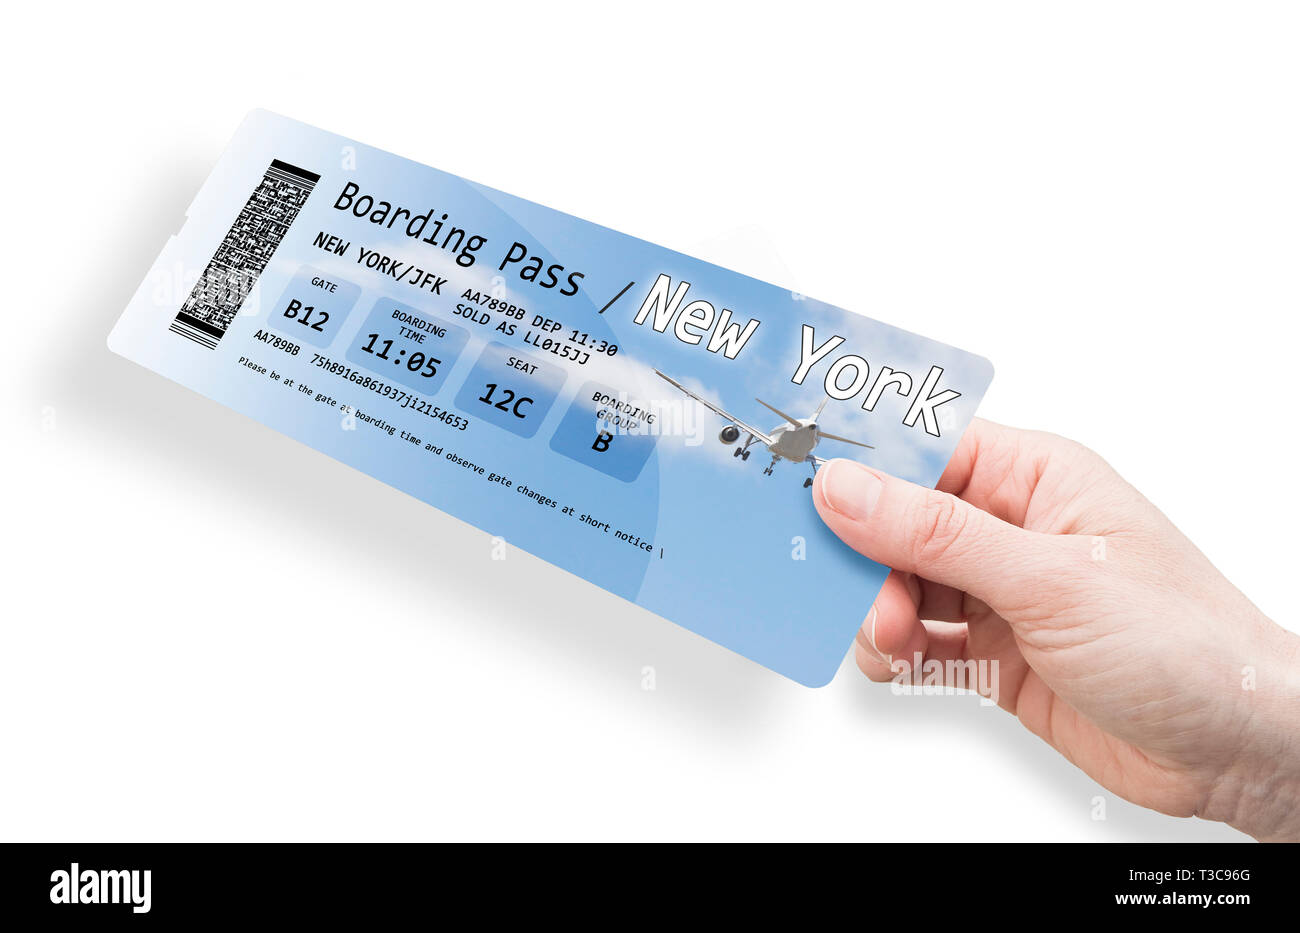 G tickets. Билет в руке. Рука держит билет. Билет на самолет картинка. Рука держит билет на самолет.